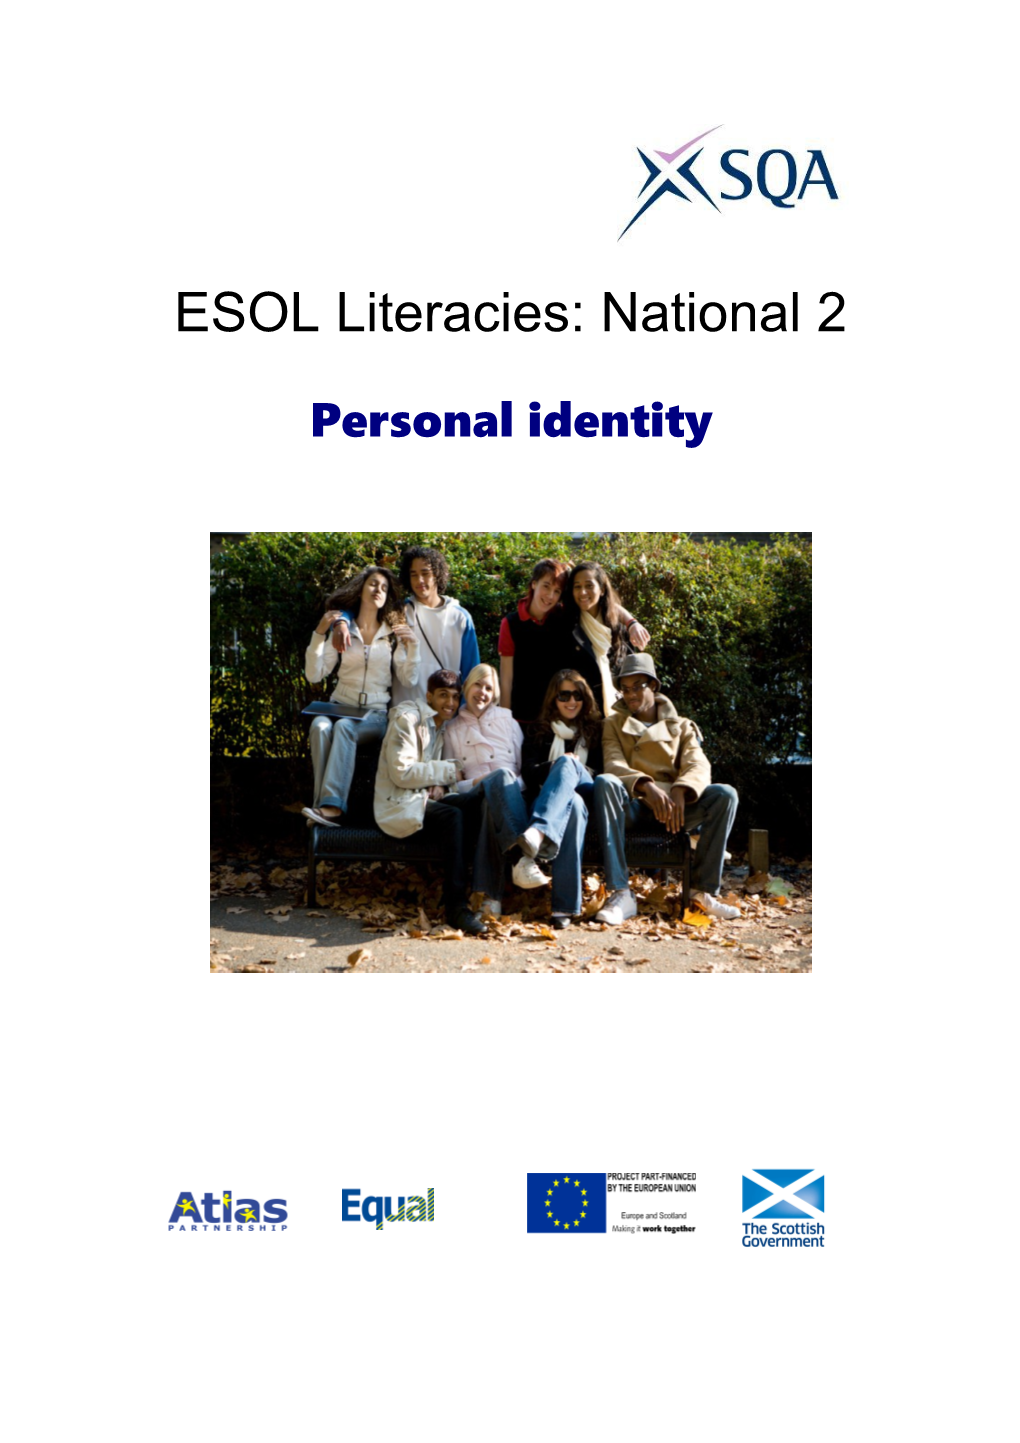 ESOL Literacies: Personal Identity